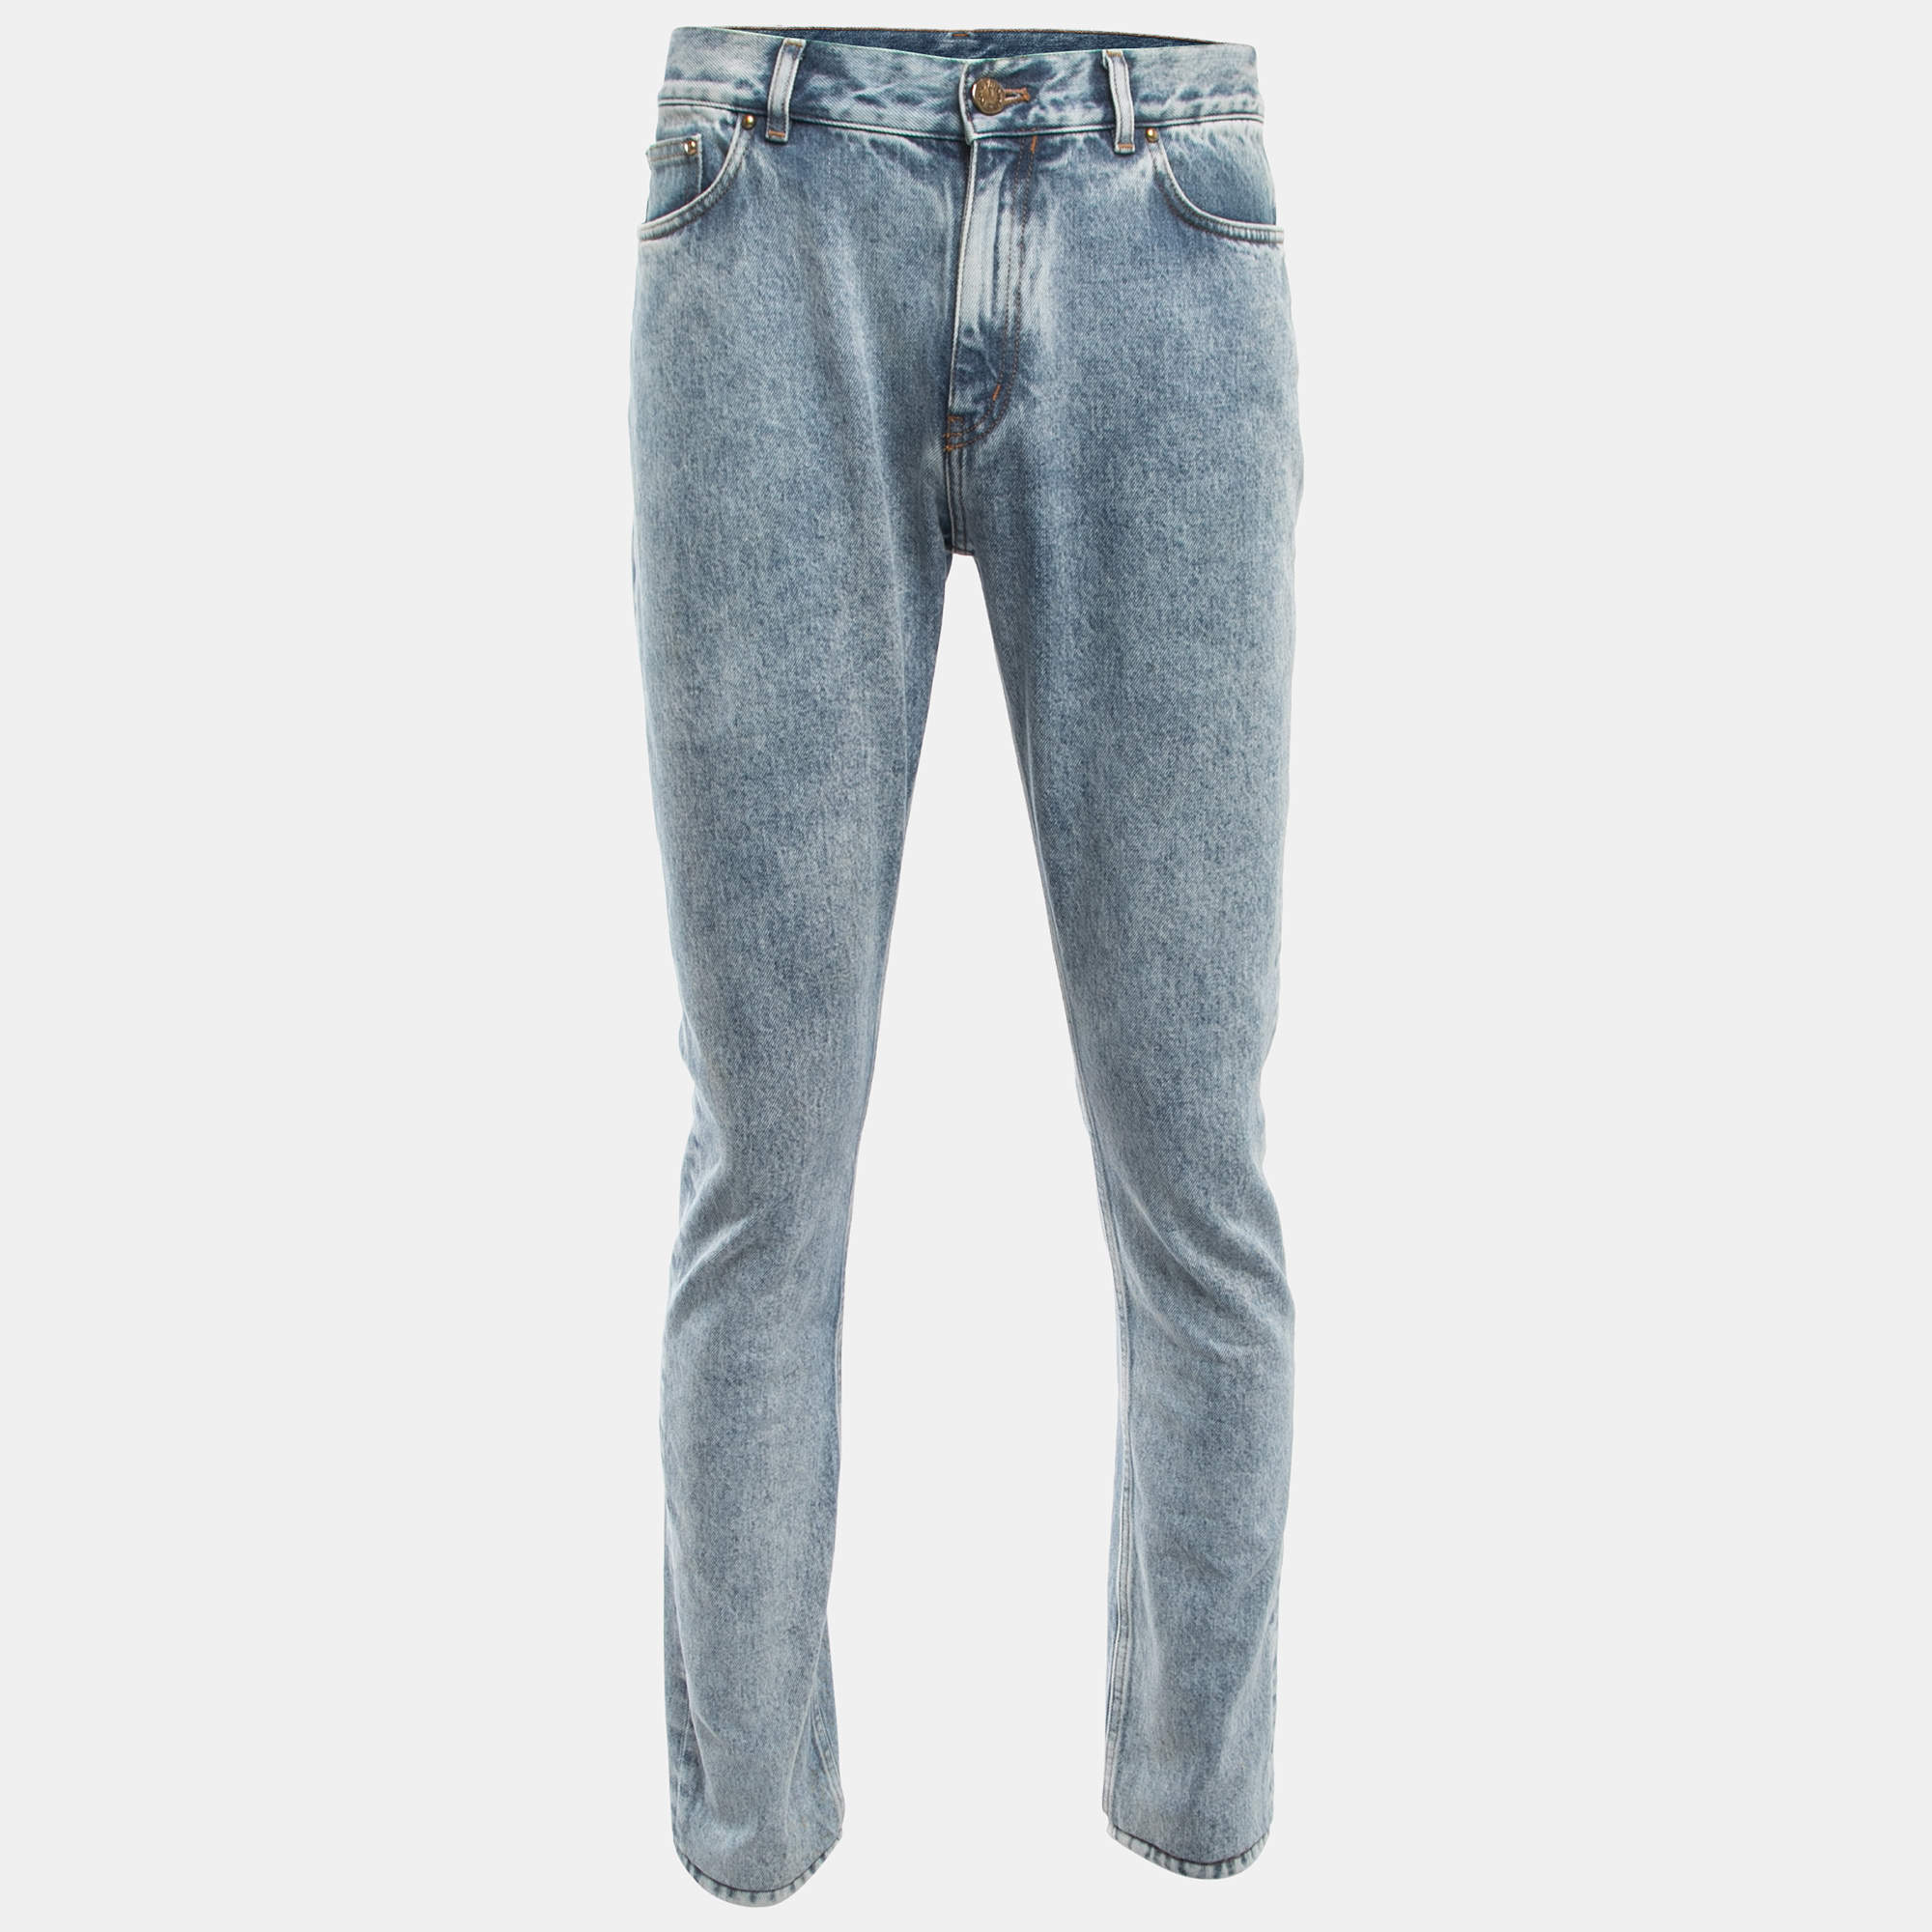 Louis Vuitton Light Blue Denim Jeans L Waist 34